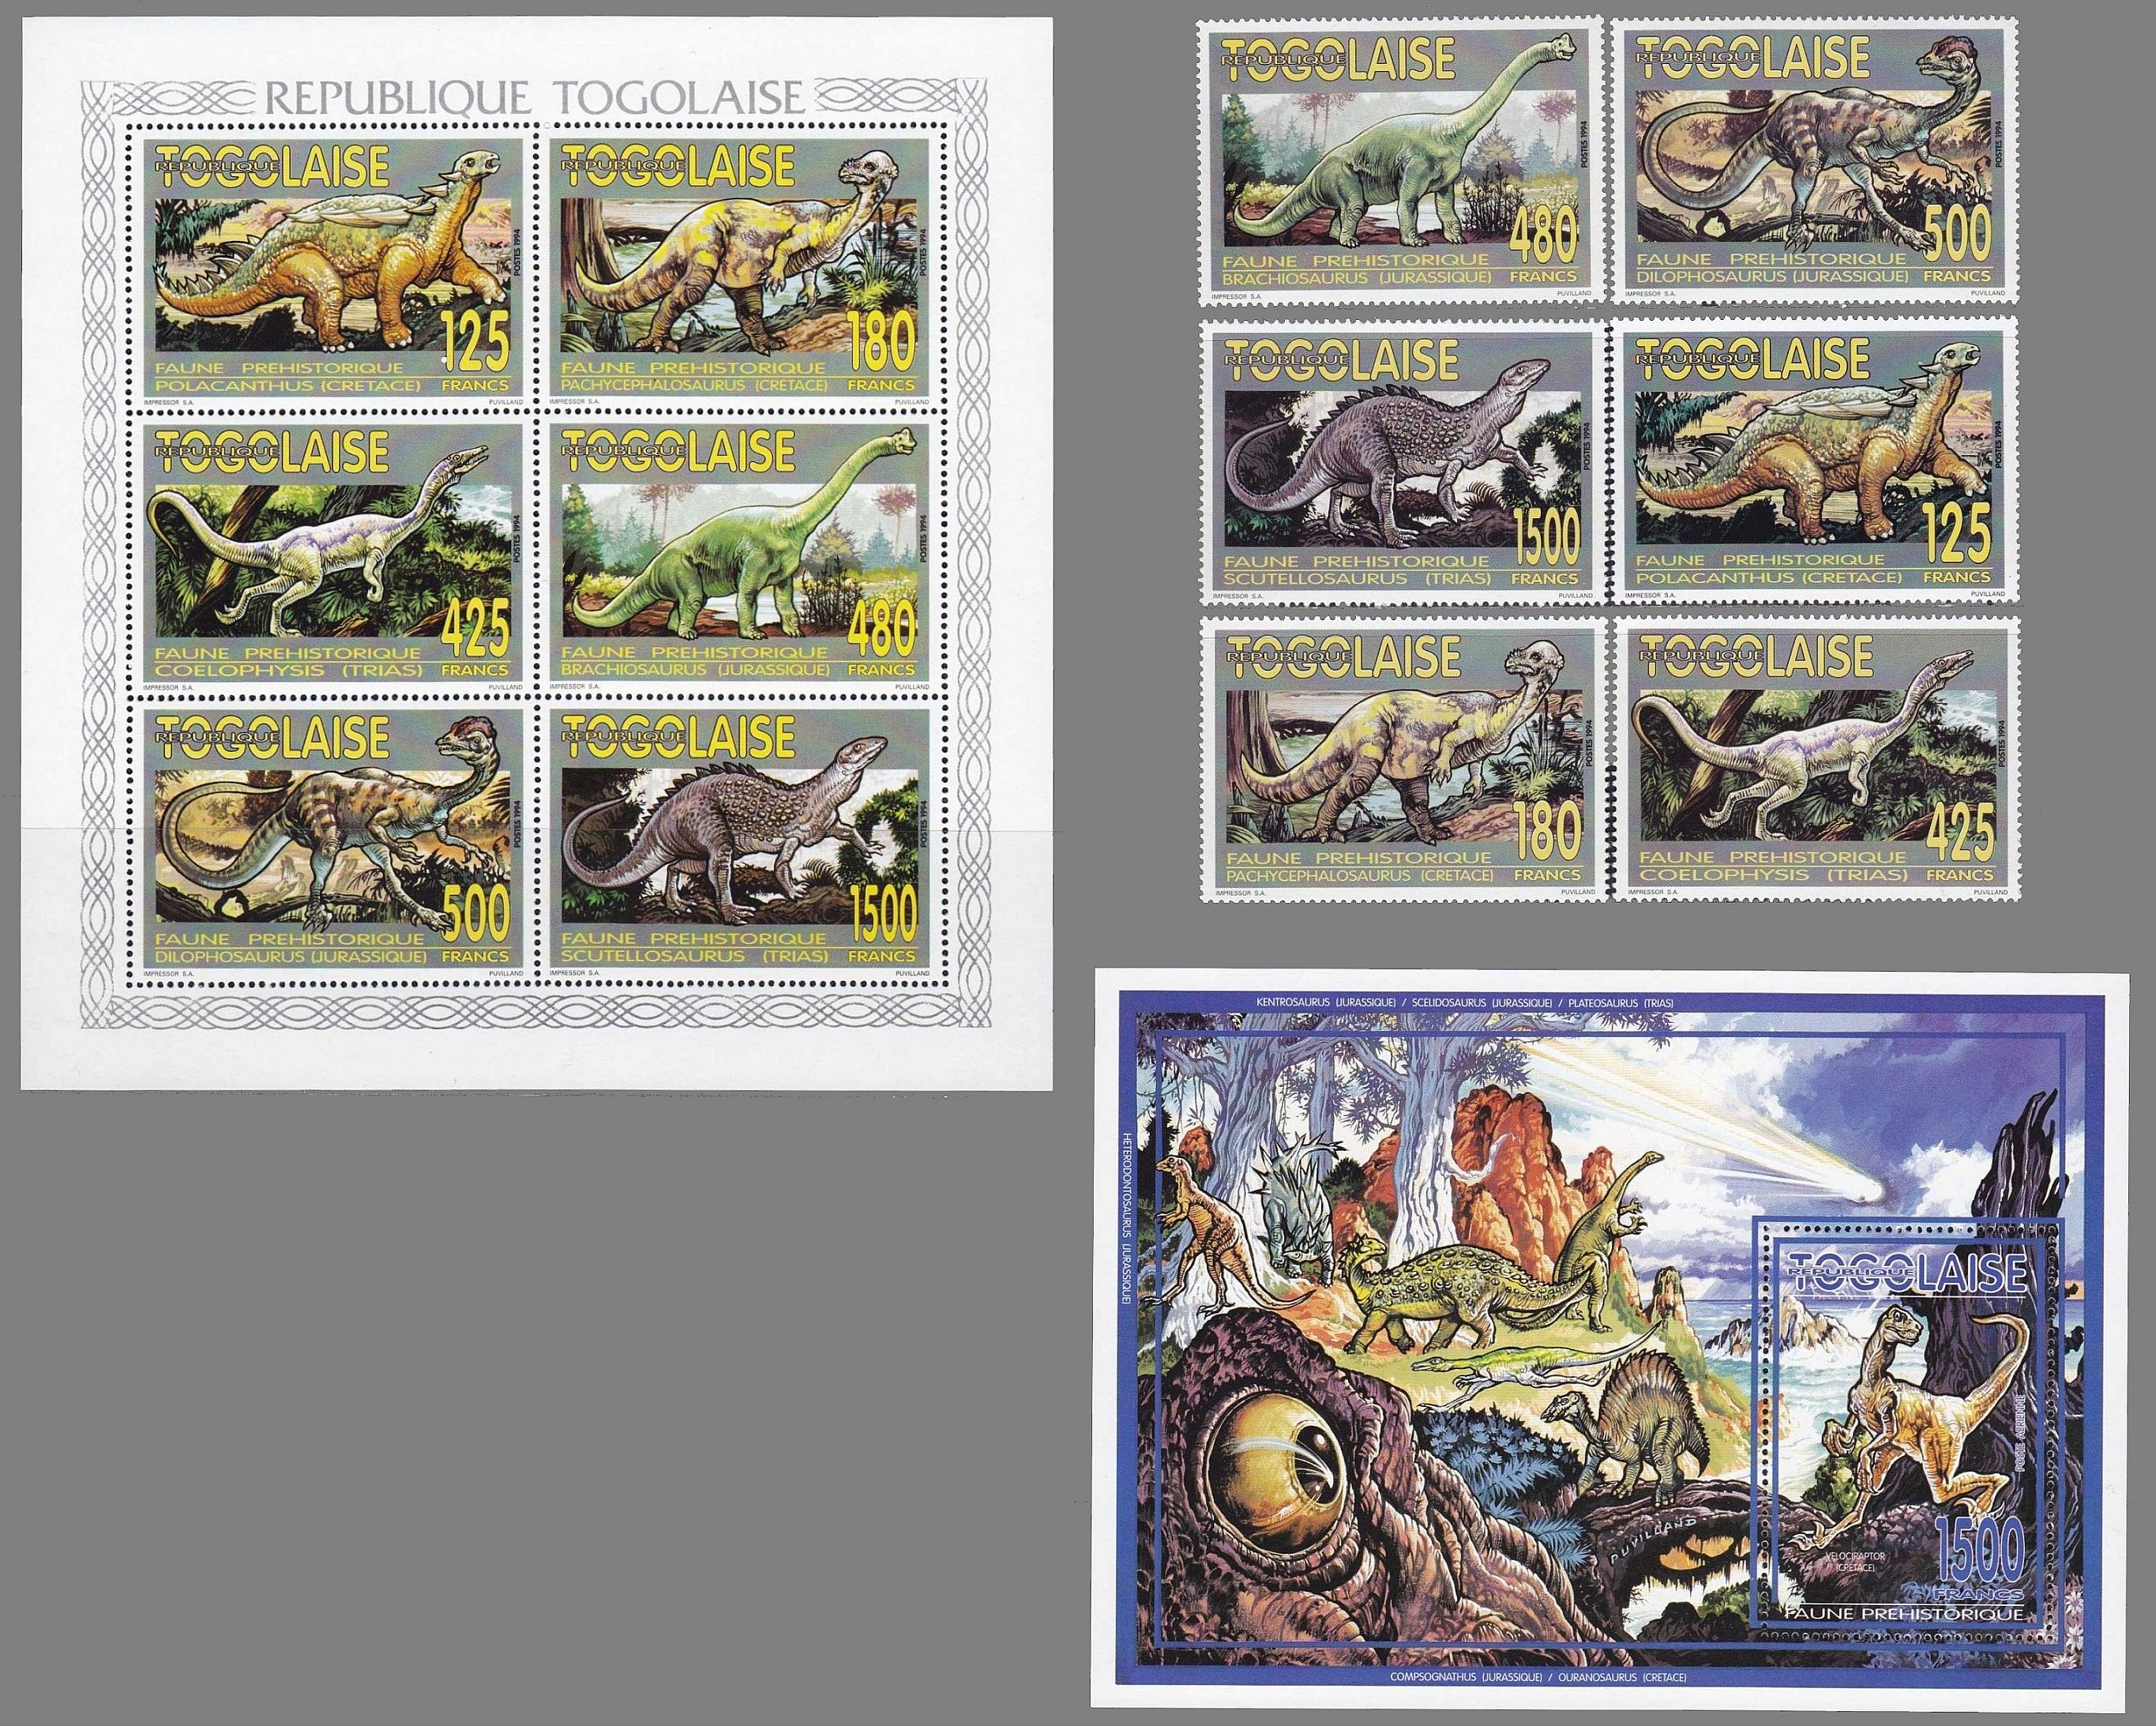  - paleontology stamps of Togo